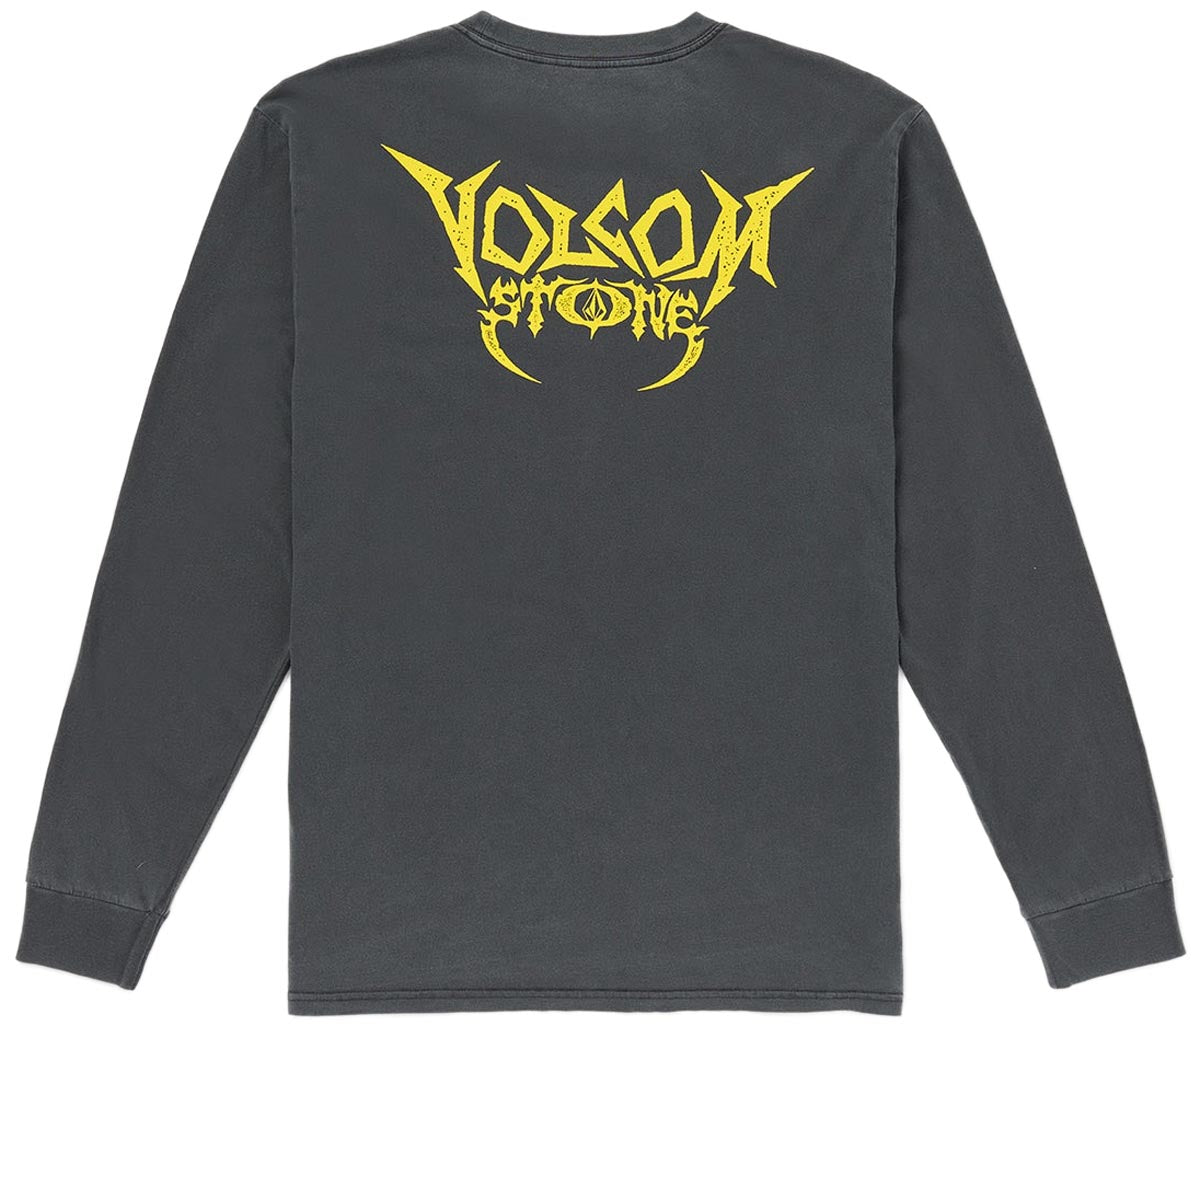 Volcom Hot Headed Long Sleeve T-Shirt - Stealth image 2